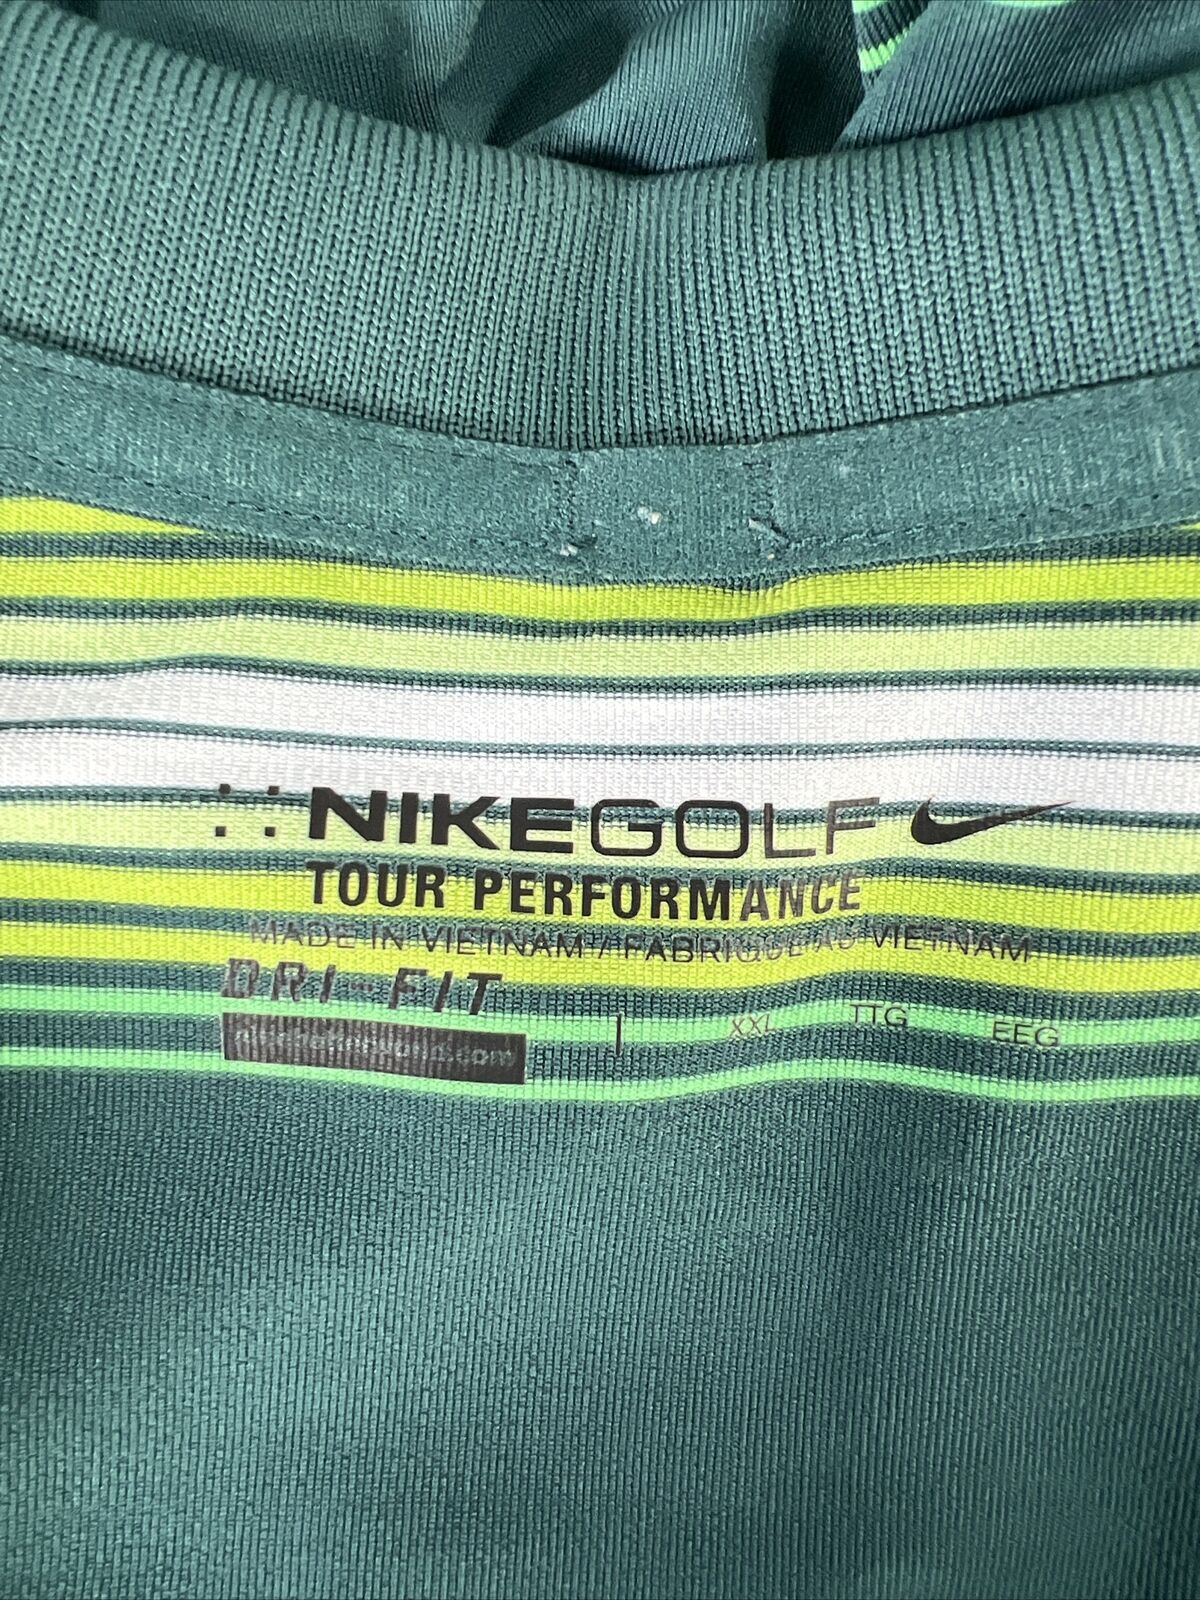 Nike Men's Green Striped Short Sleeve Golf Polo Shirt - XXL